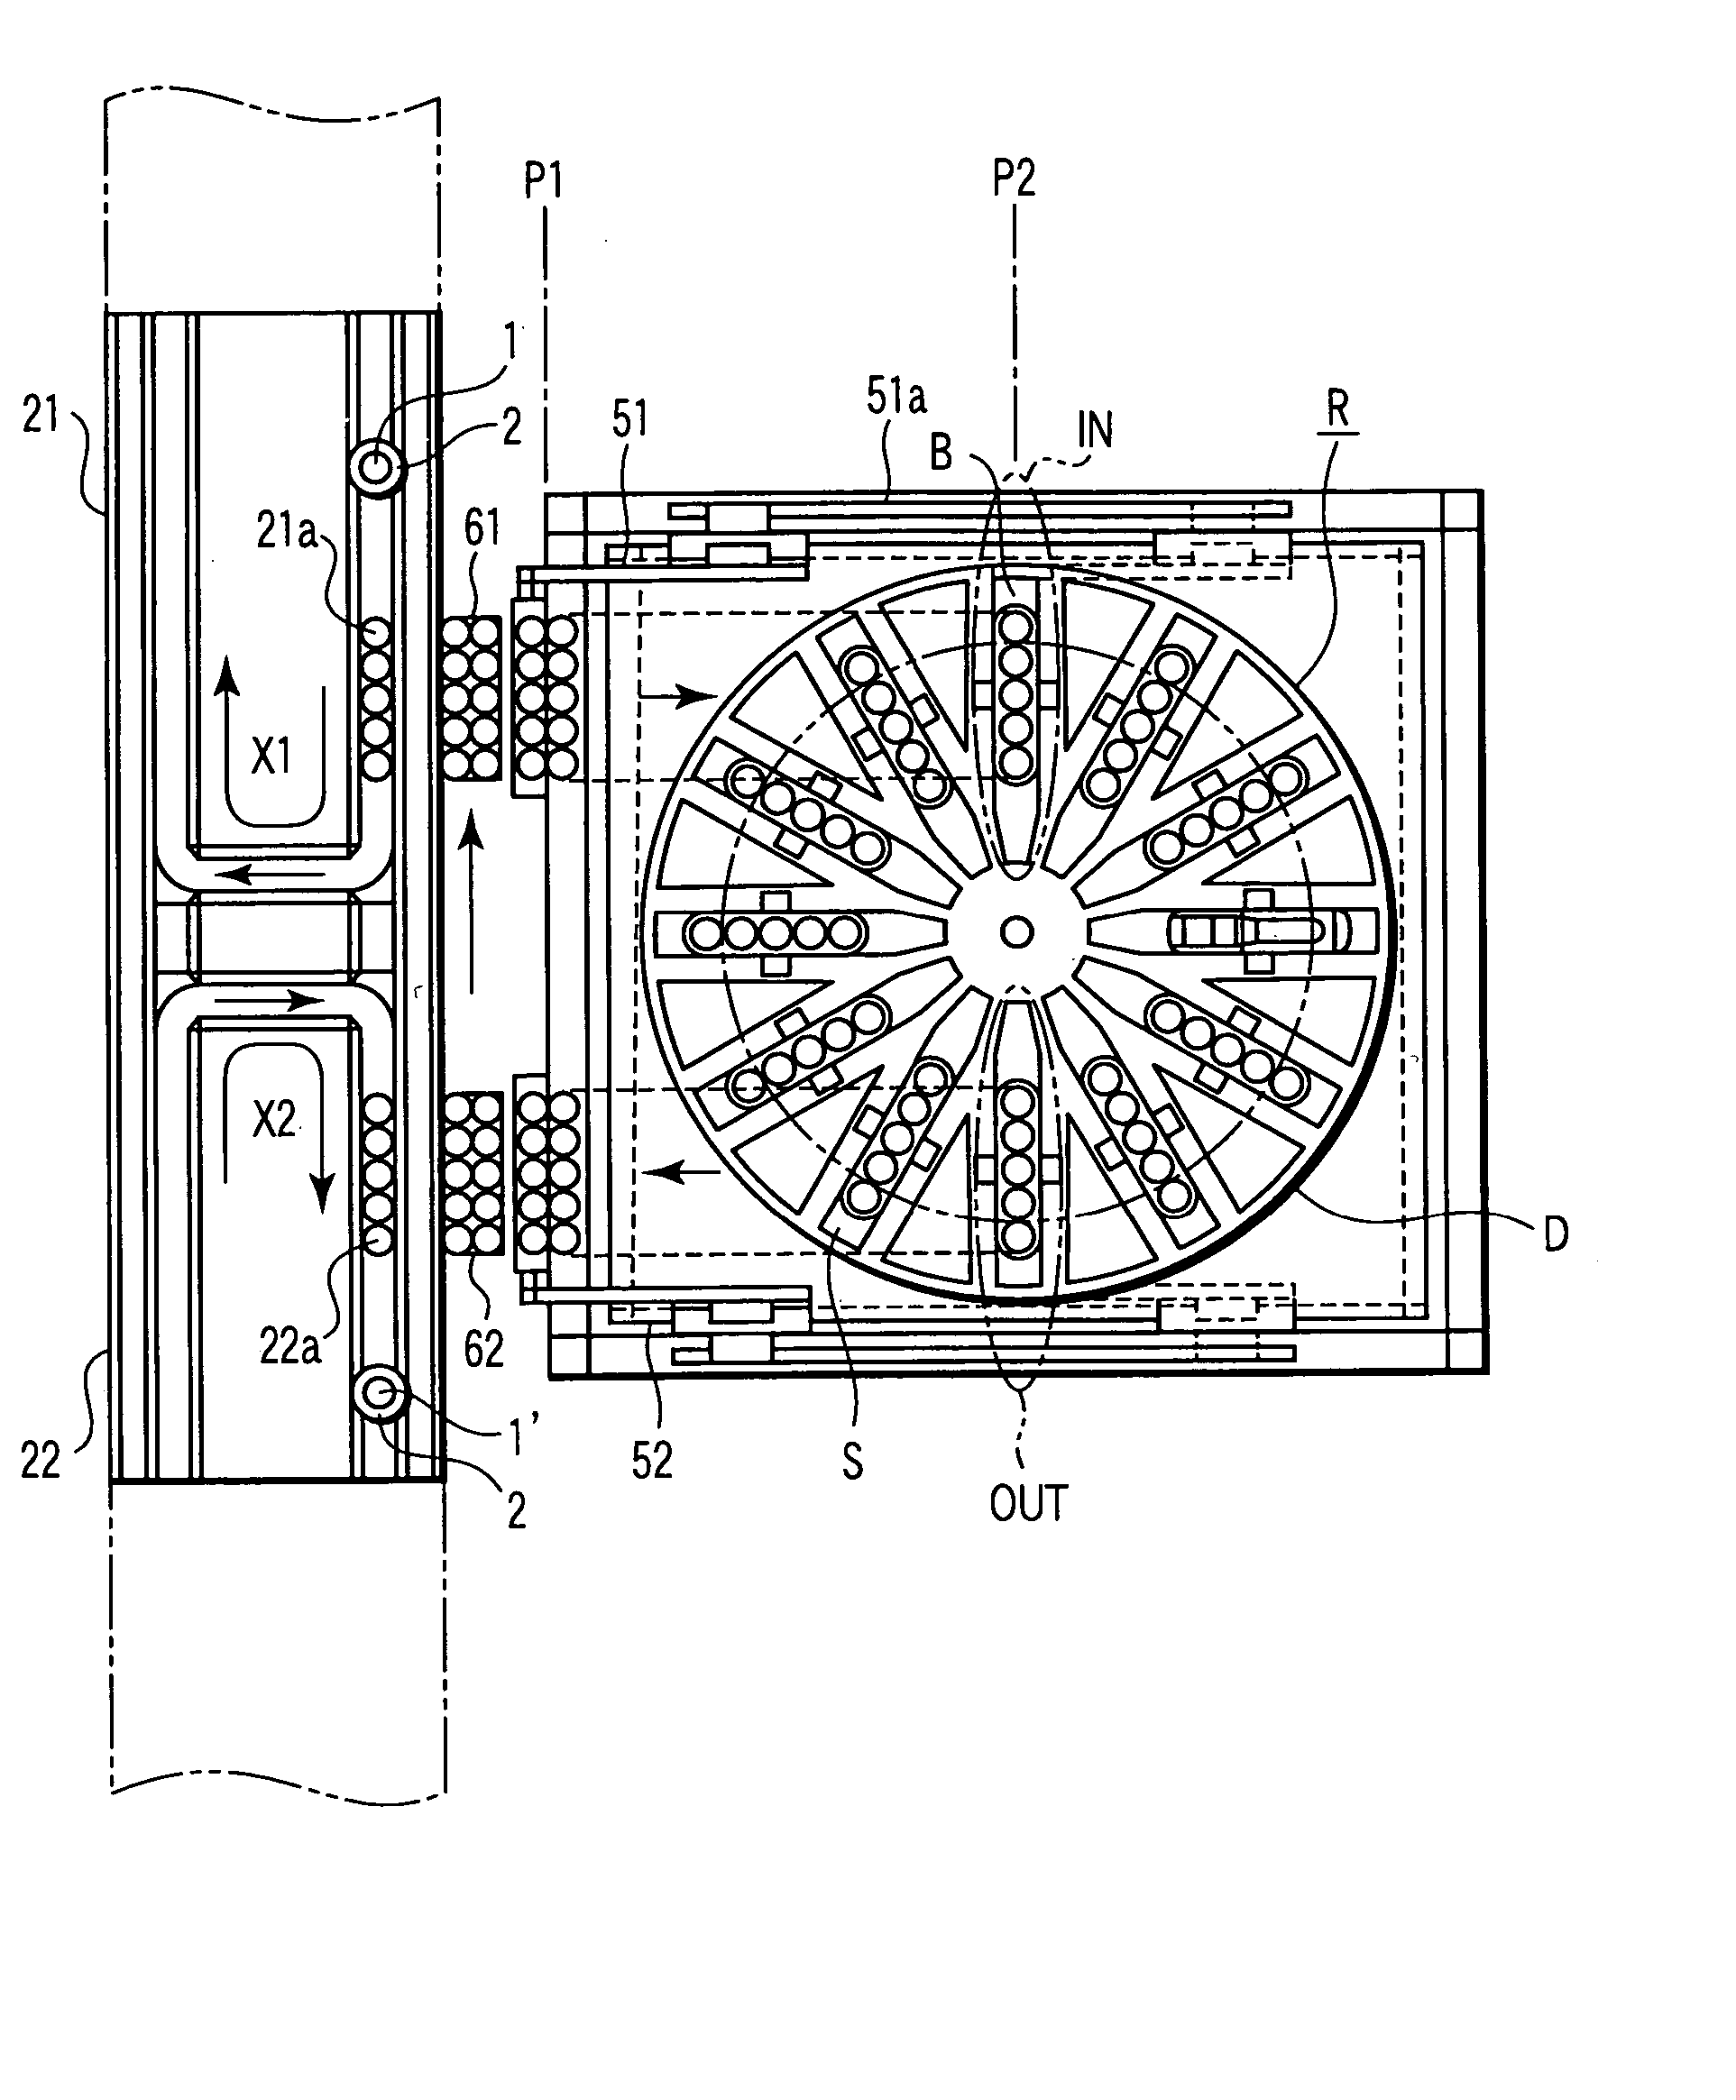 Specimen centrifuge apparatus